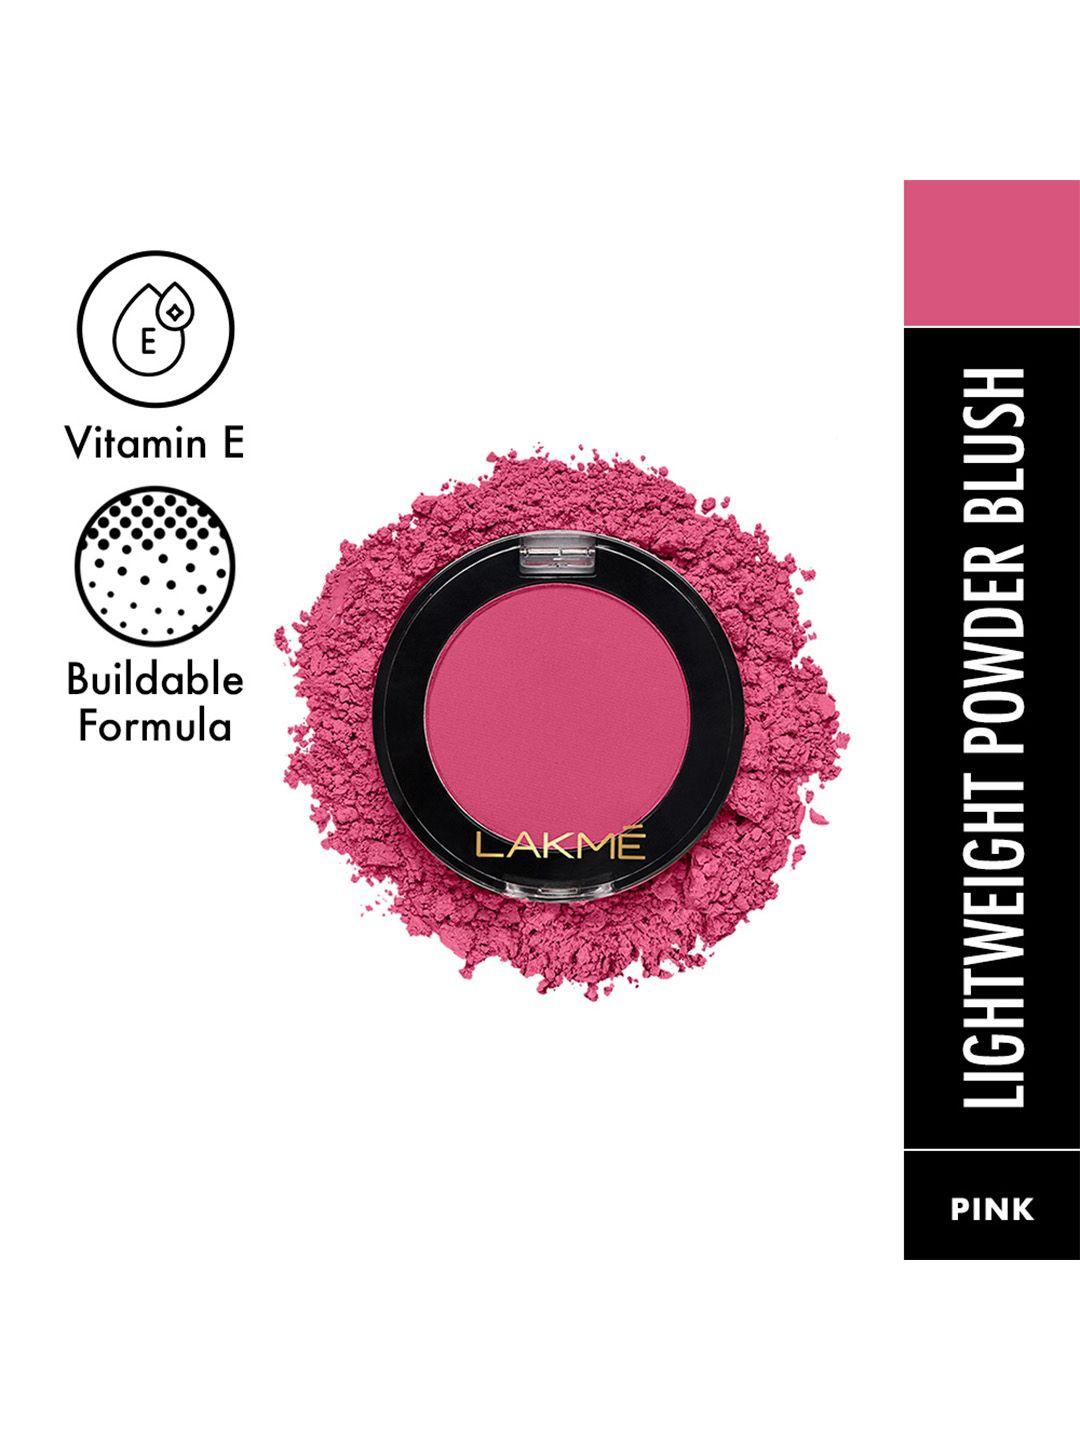 lakme face it lightweight powder blush with vitamin e 4 g - flushed pink b2